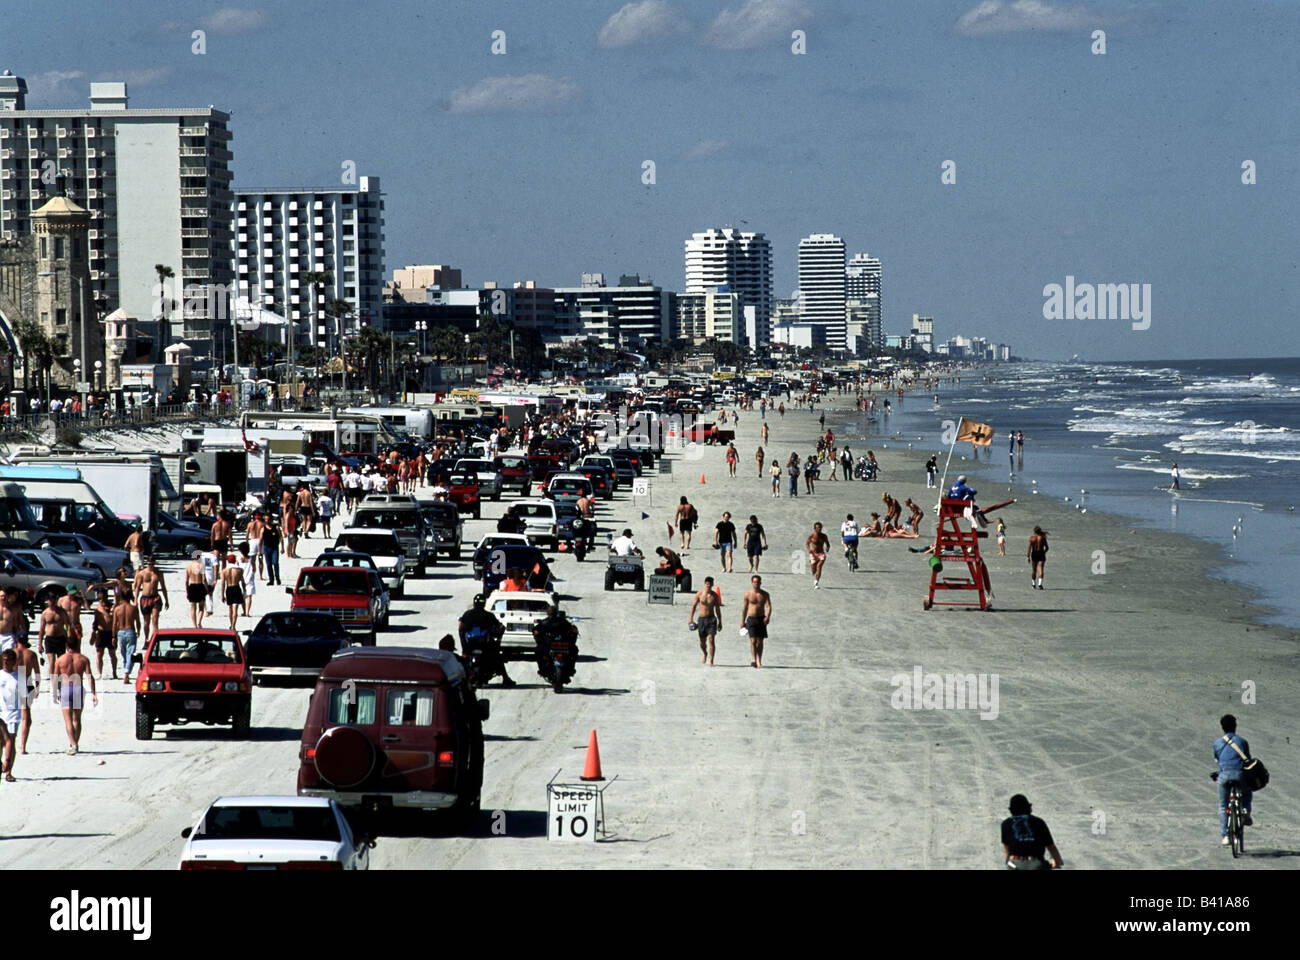 Geografie/Reisen, USA, Florida, Daytona Beach, Auto, Strand, Touristen, Massentourismus, Urlaub, Urlaub, Urlaub, Reisen, Stockfoto